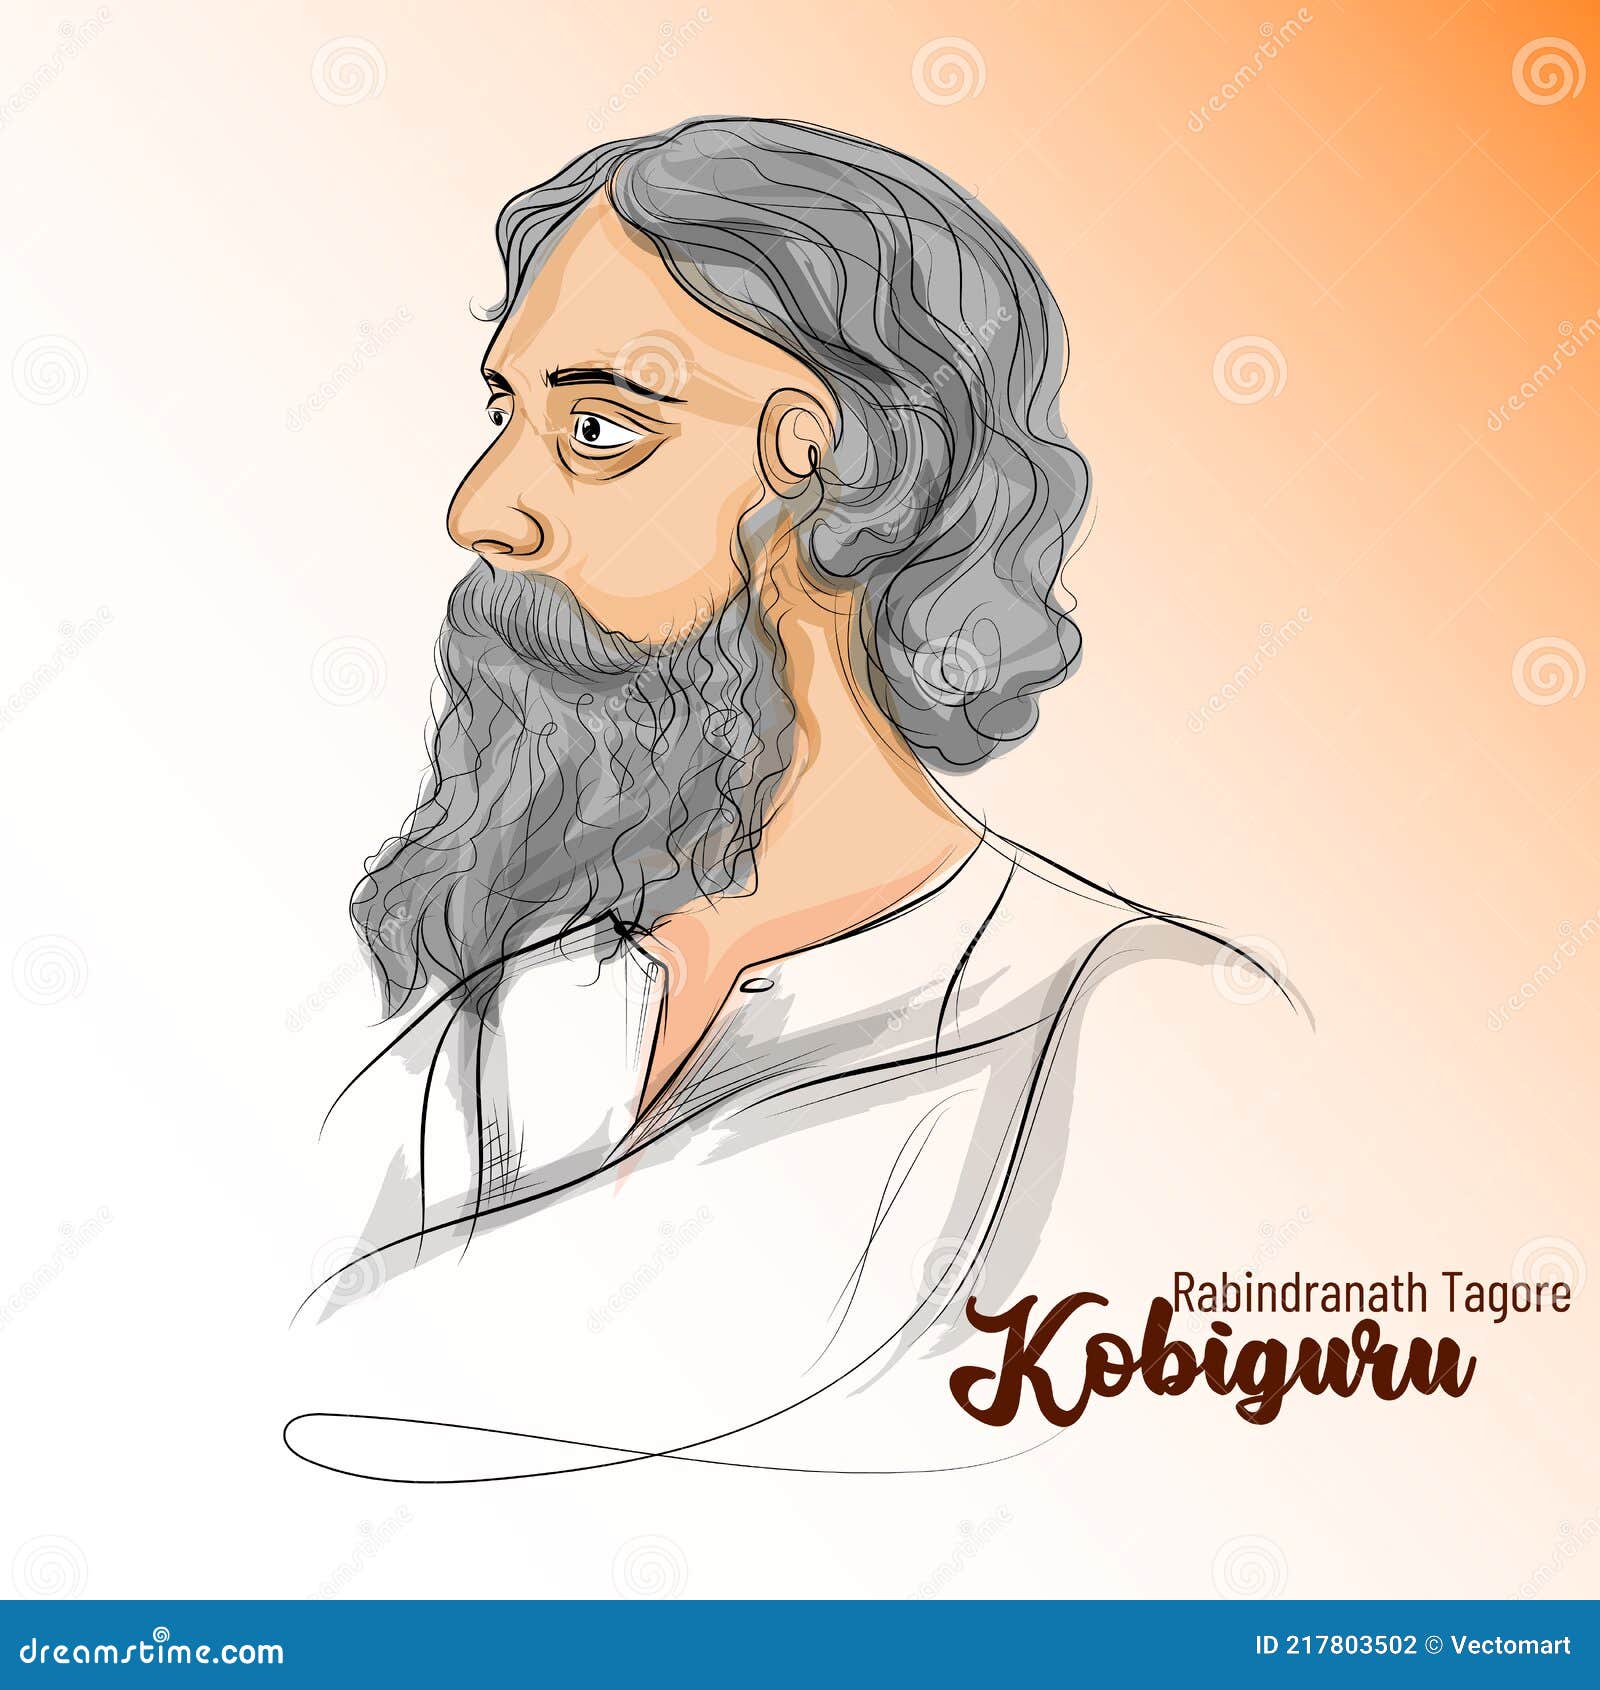 Rabindranath Tagore | Pencil sketch images, Princess cartoon, Easy drawings-saigonsouth.com.vn